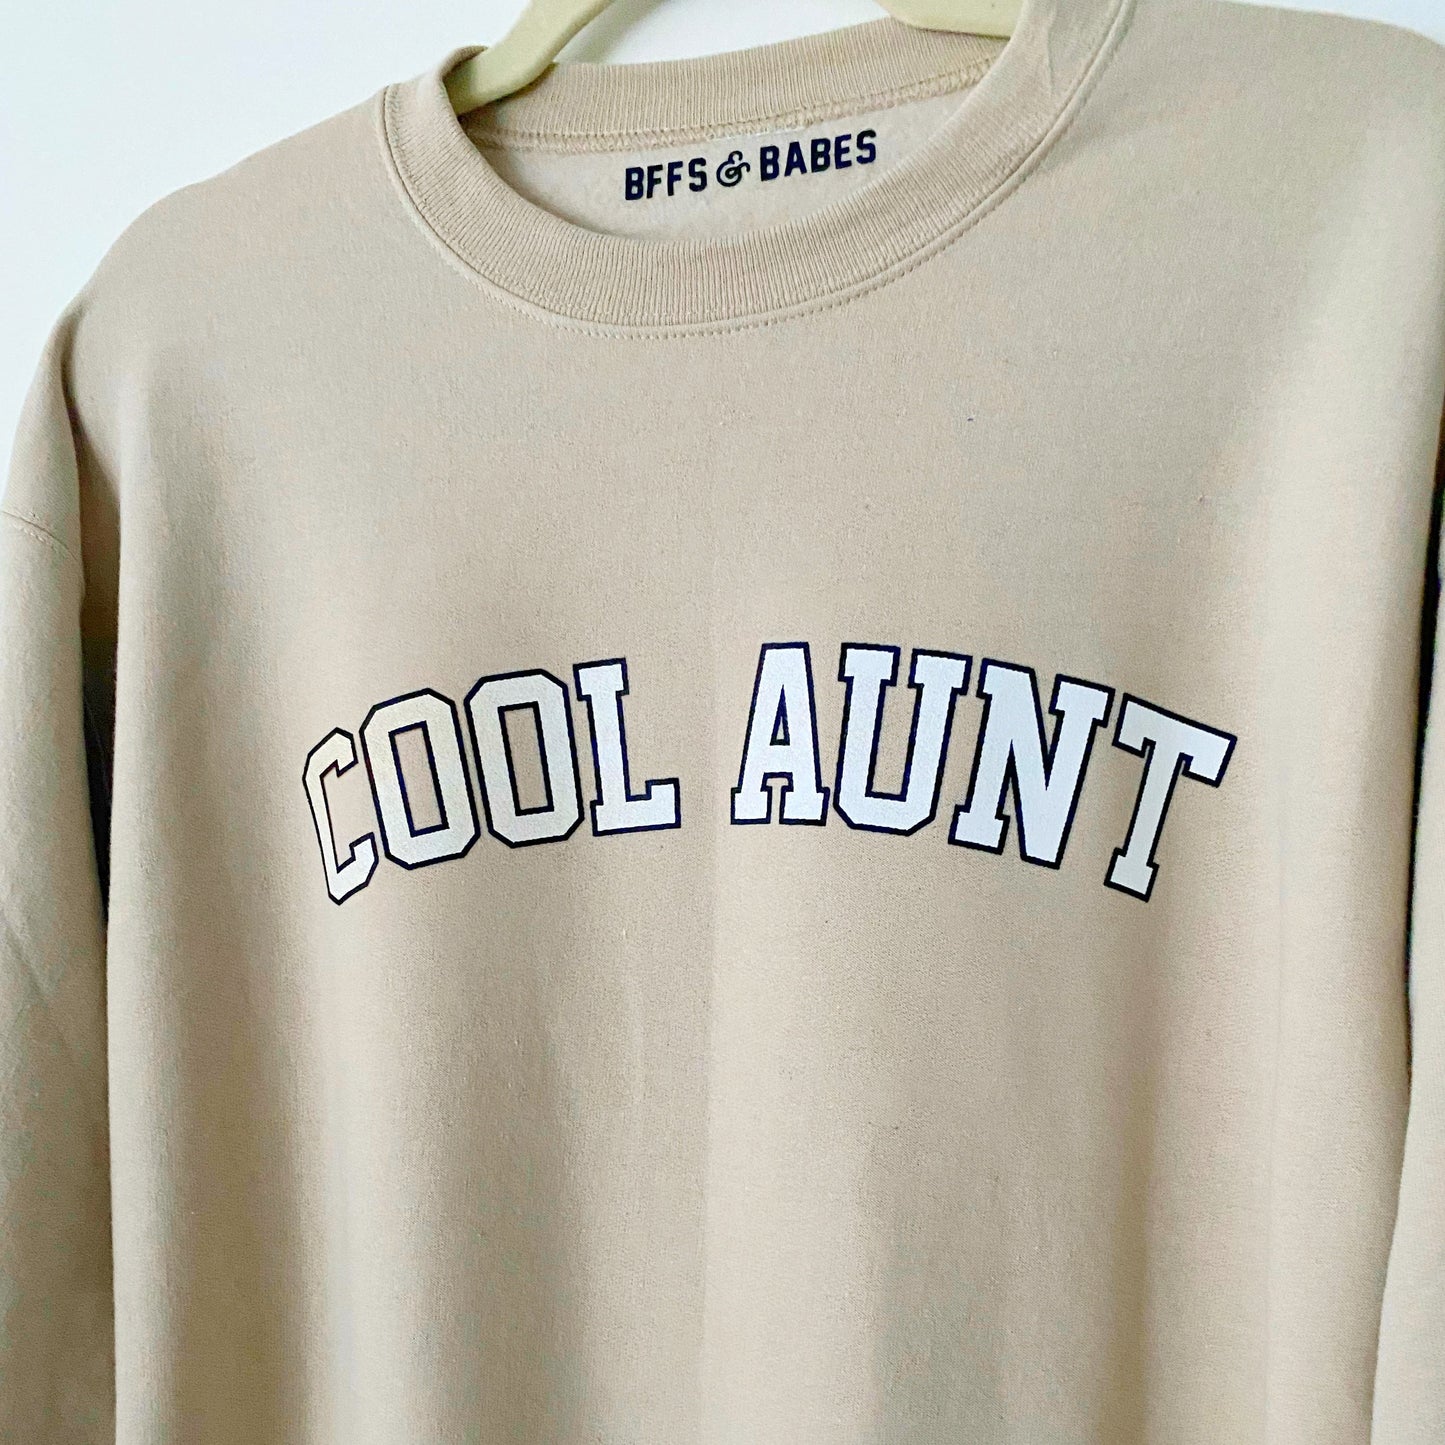 COLLEGIATE AUNT ♡ beige printed cool aunt sweatshirt